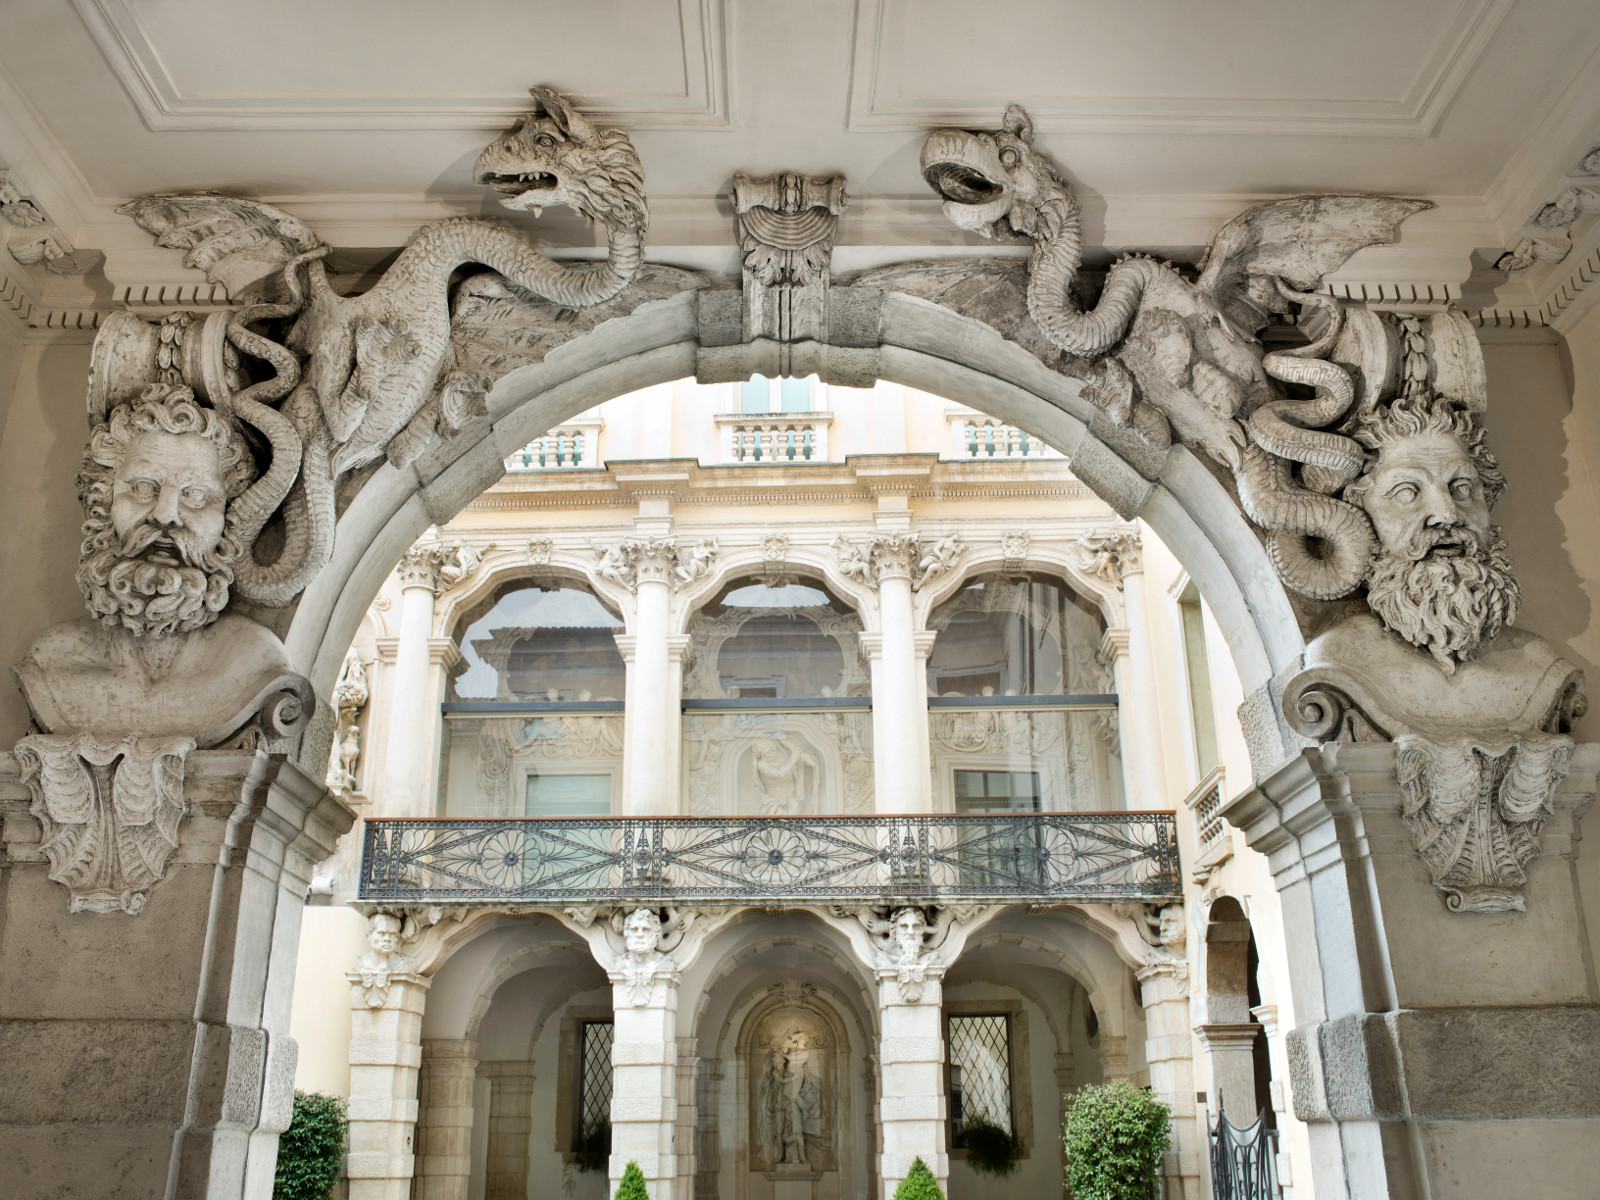 Façade of Palazzo Leoni Montanari